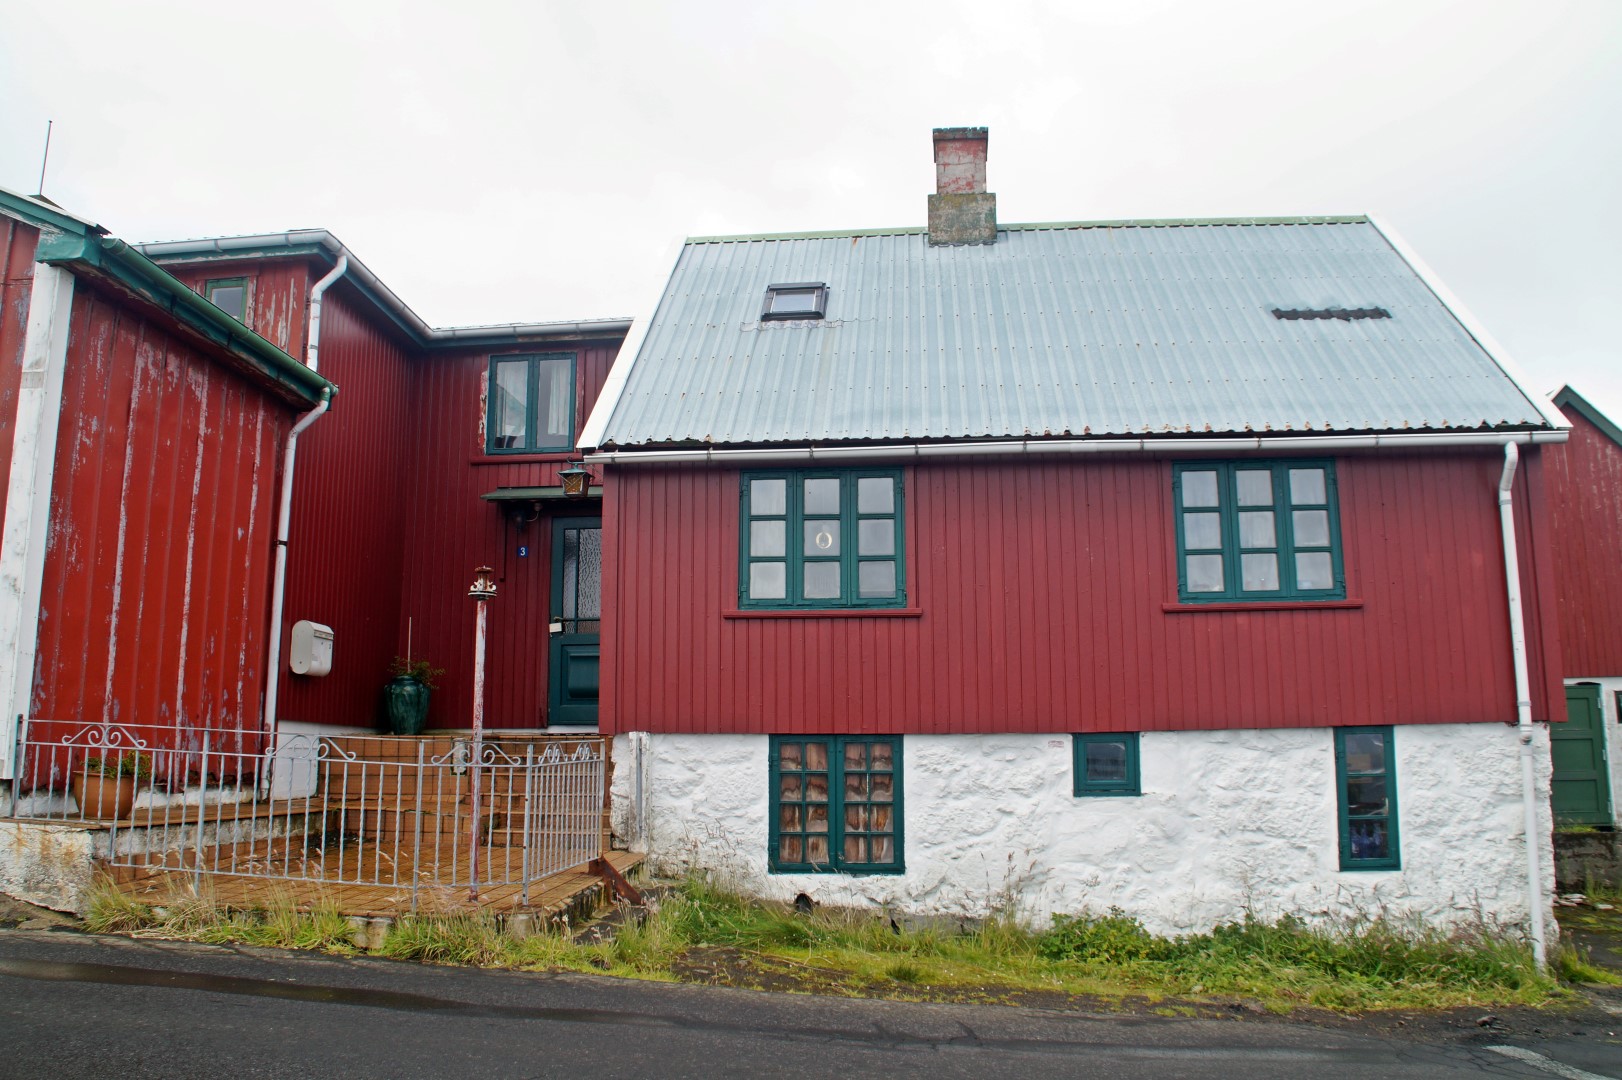 Our cozy home in Tórshavn